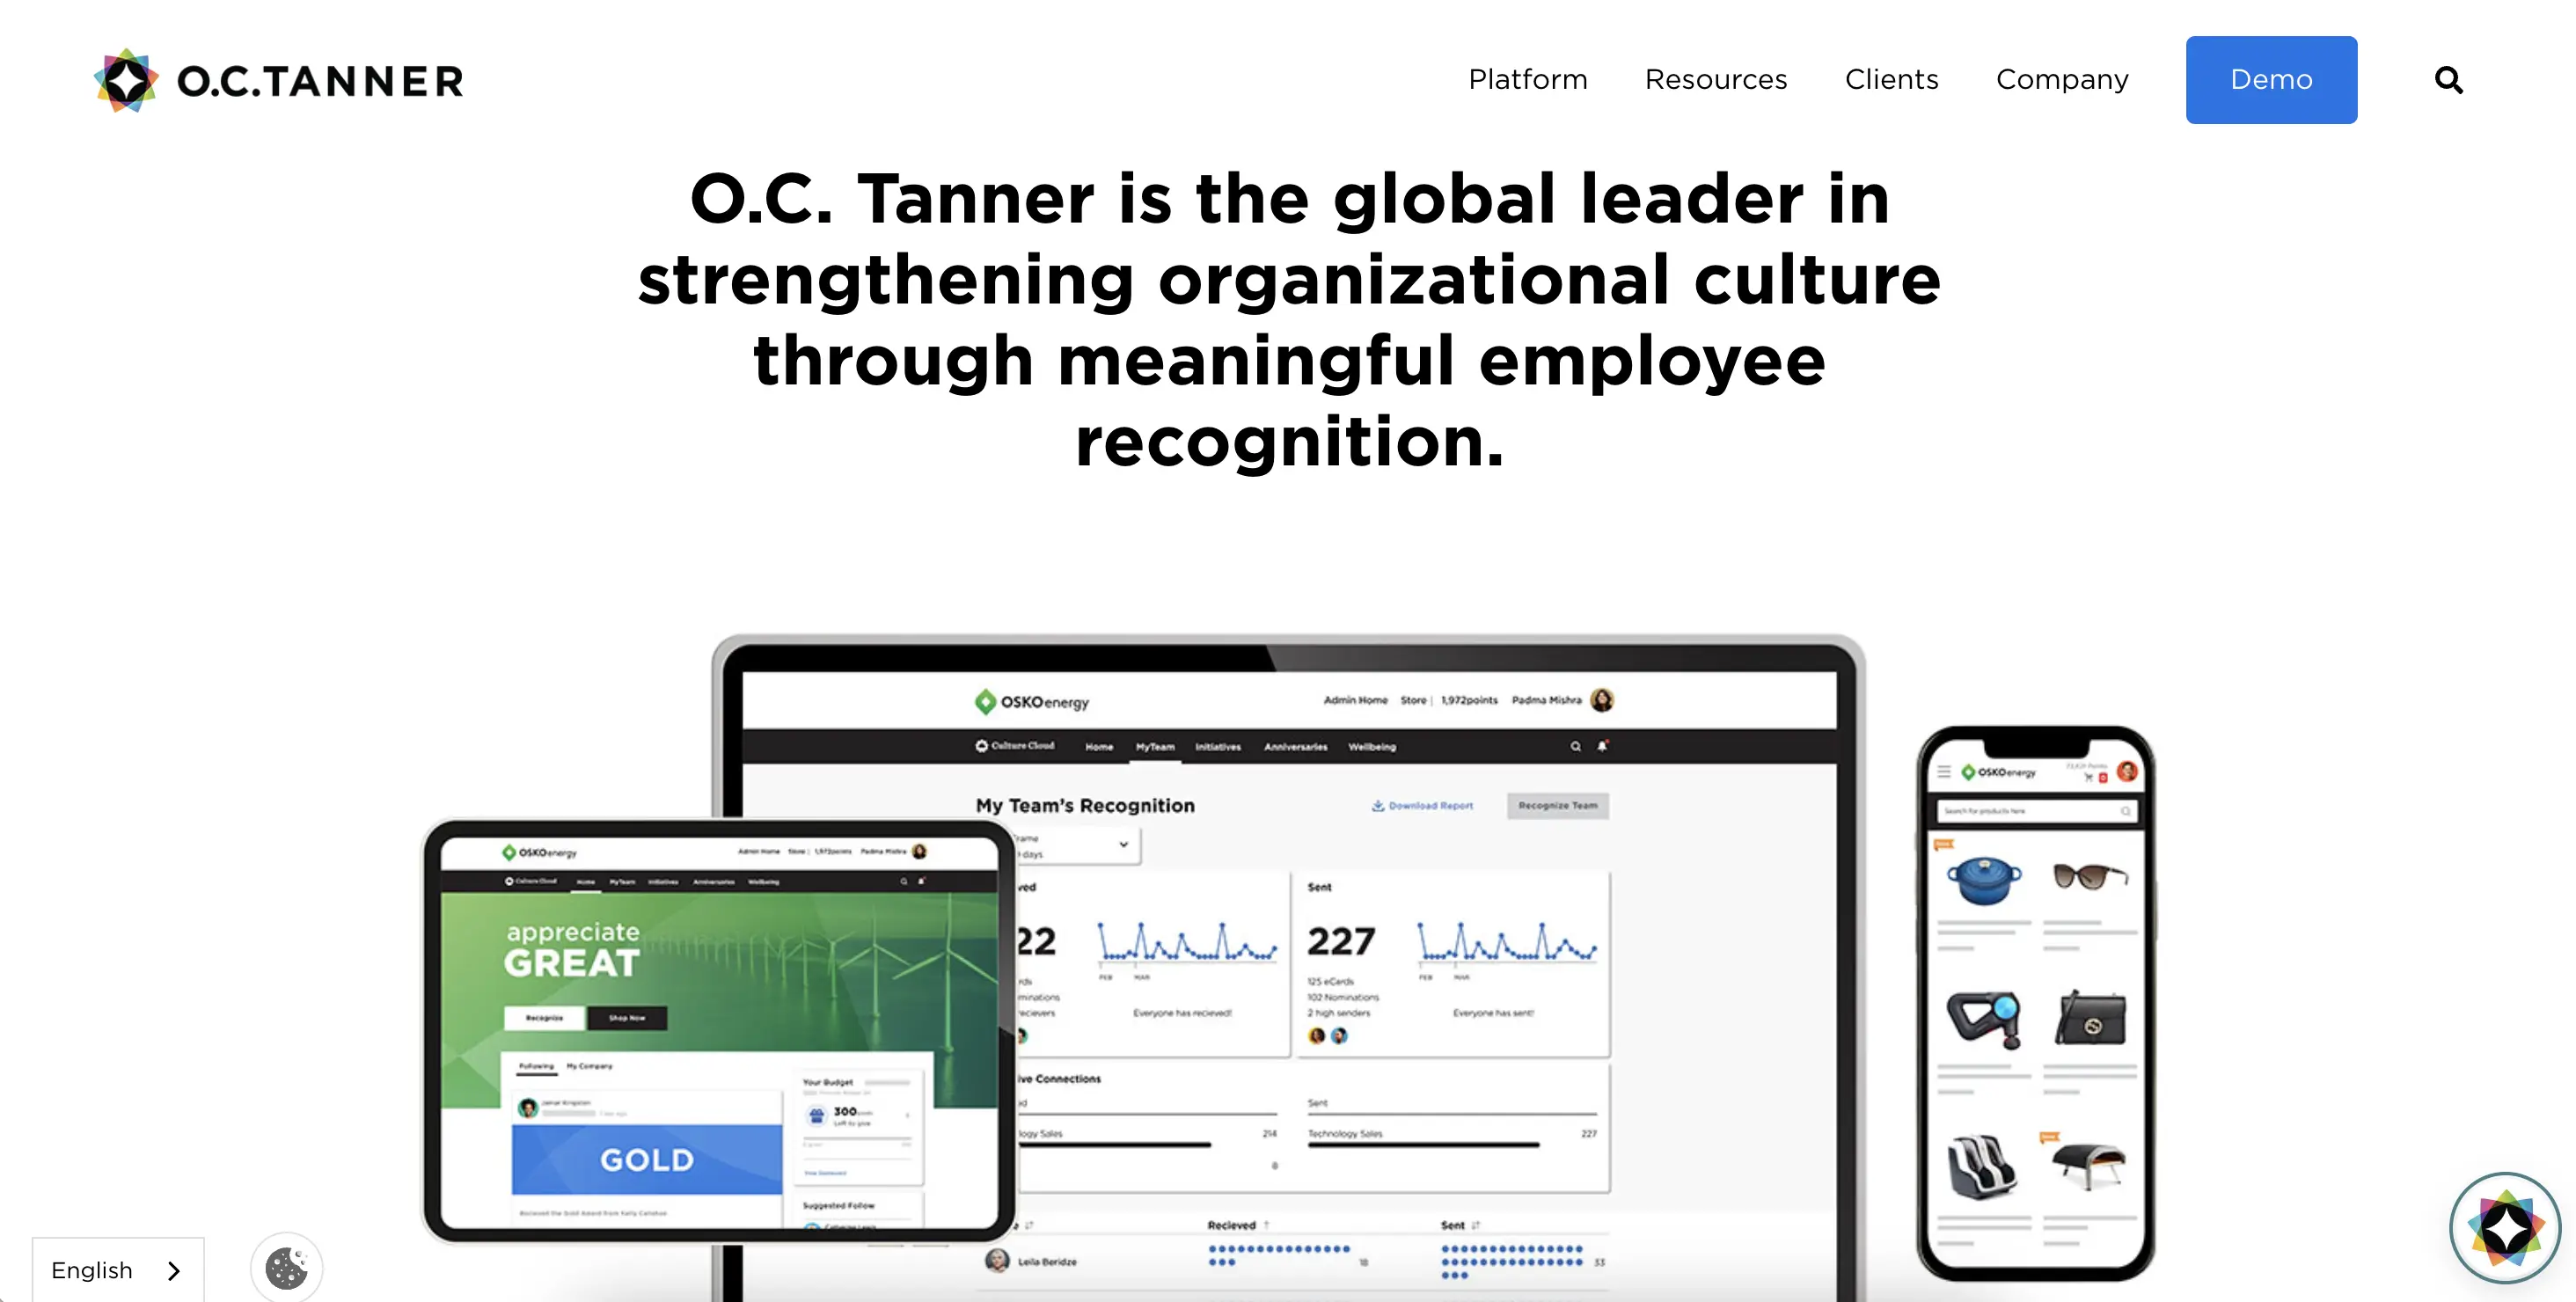 O.C. Tanner employee recognition program